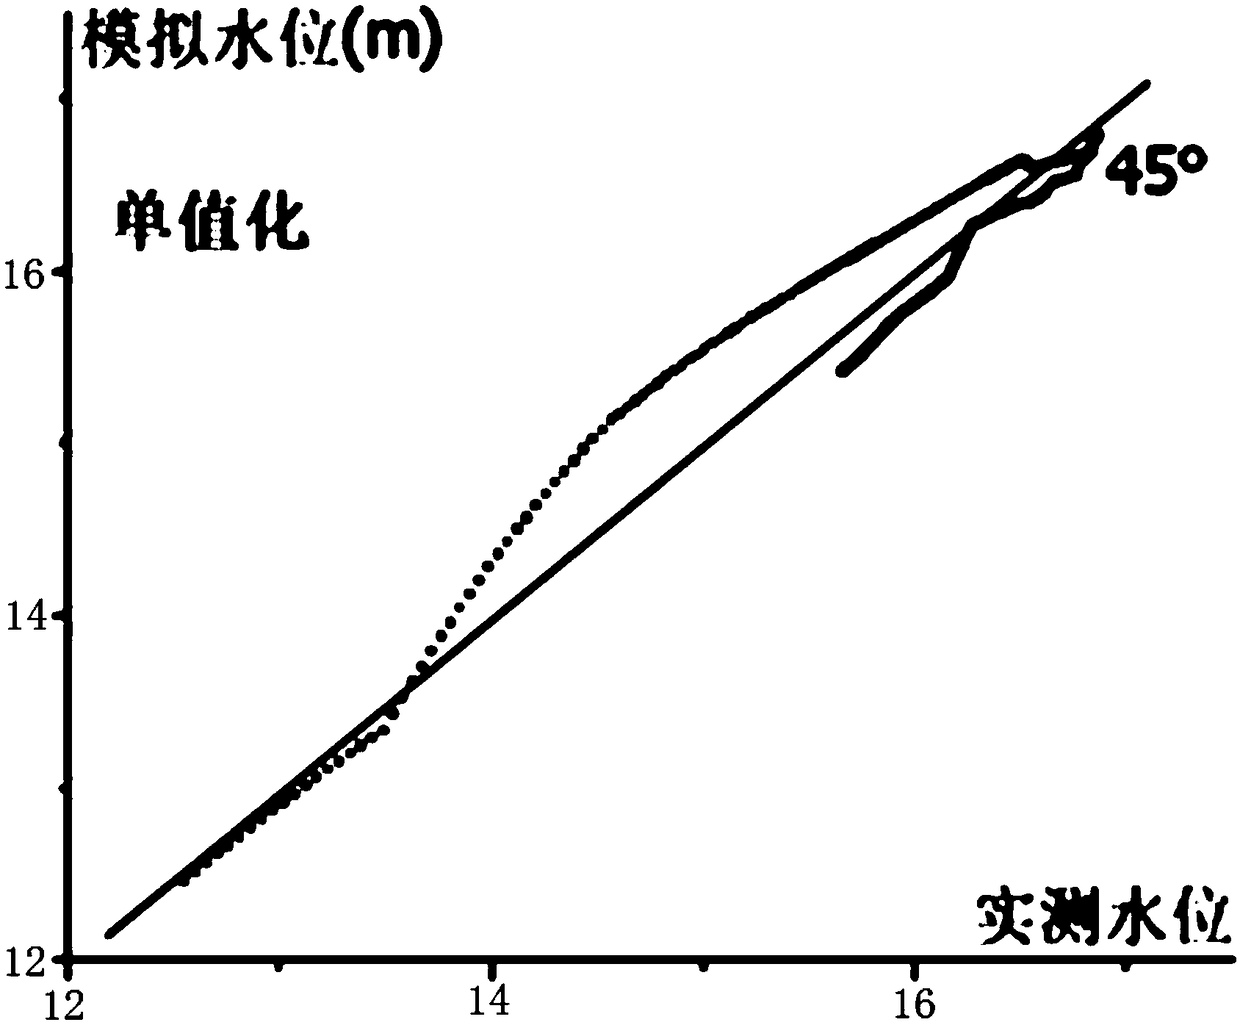 Multi-station linkage rating curve fitting method